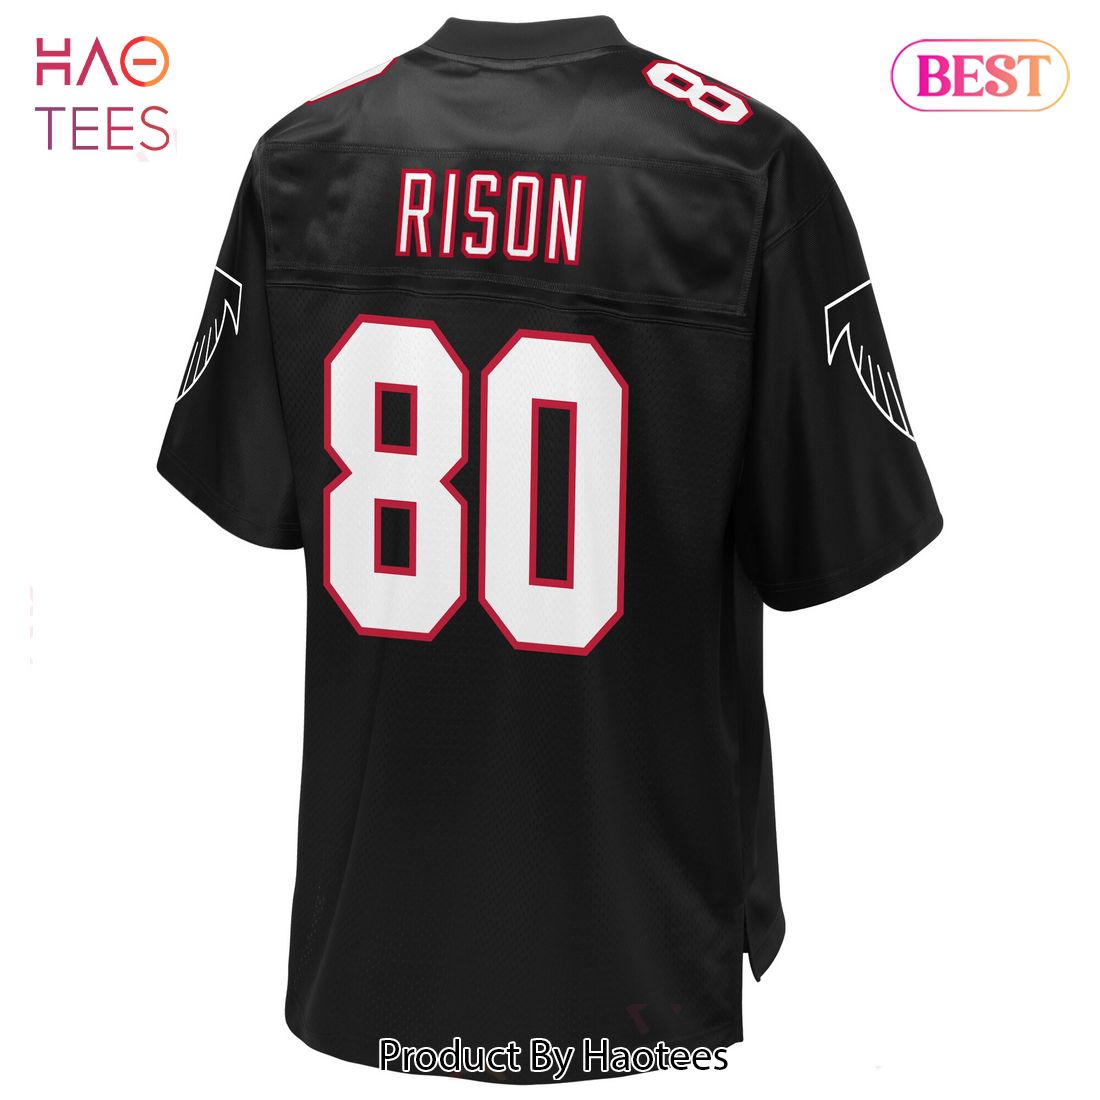 Andre Rison Atlanta Falcons NFL Pro Line Retired Player Jersey Black